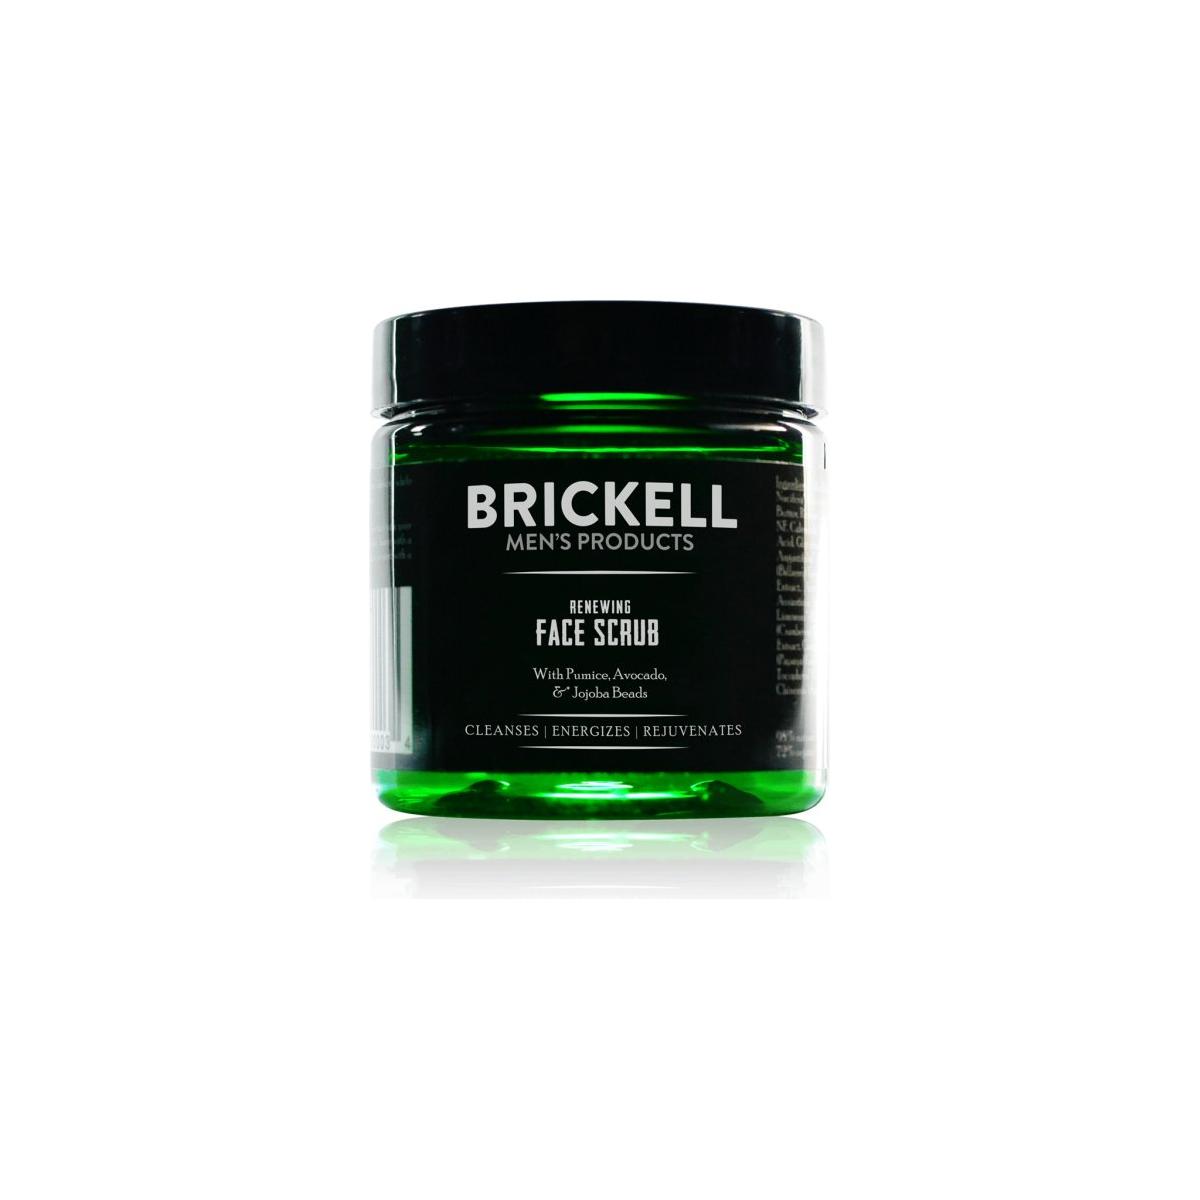 Brickell Renewing Face Scrub - 118ml - Glam Global UK